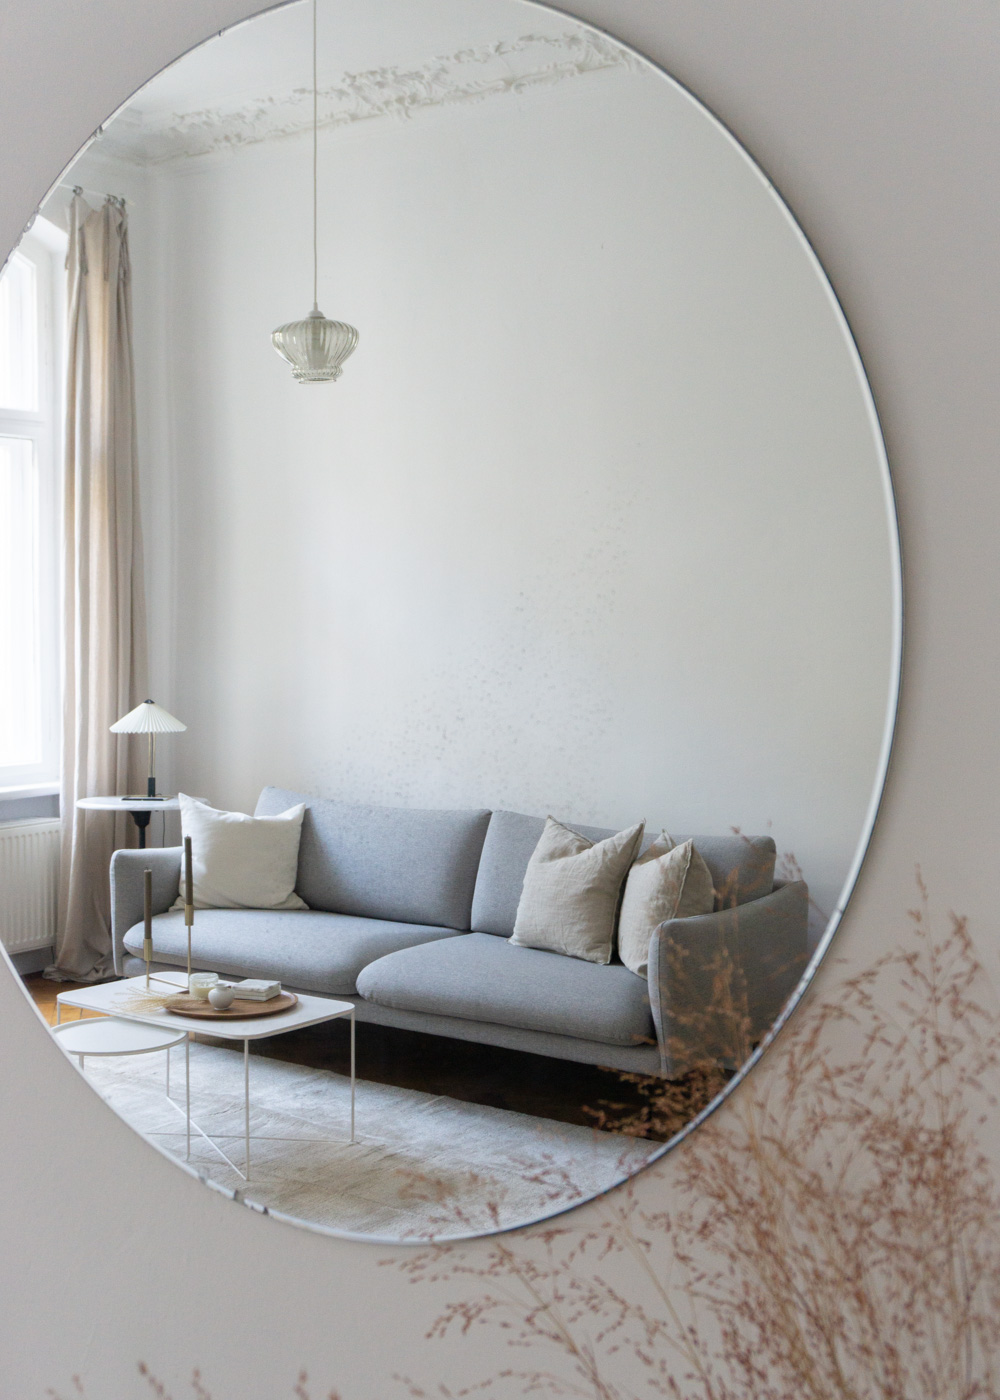 Round Mirror, Grey Sofa, Beige Living Room - Neutral Home, Scandinavian Aesthetic, Berlin Apartment, White Interior, Calm Lighting | RG Daily Blog